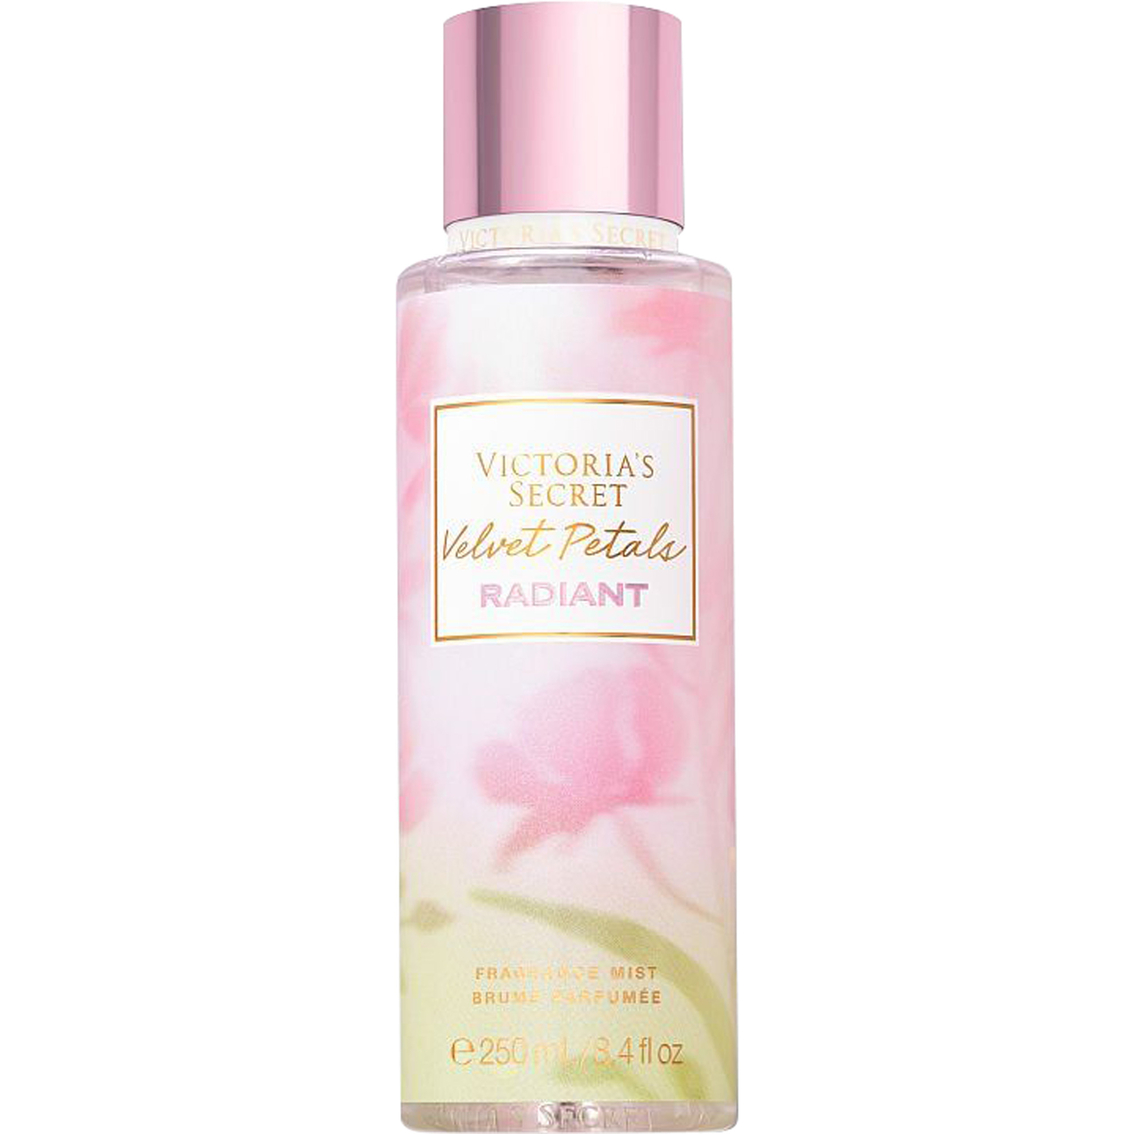 Victoria's Secret Velvet Petals Radiant Fragrance Mist 8.4 oz.